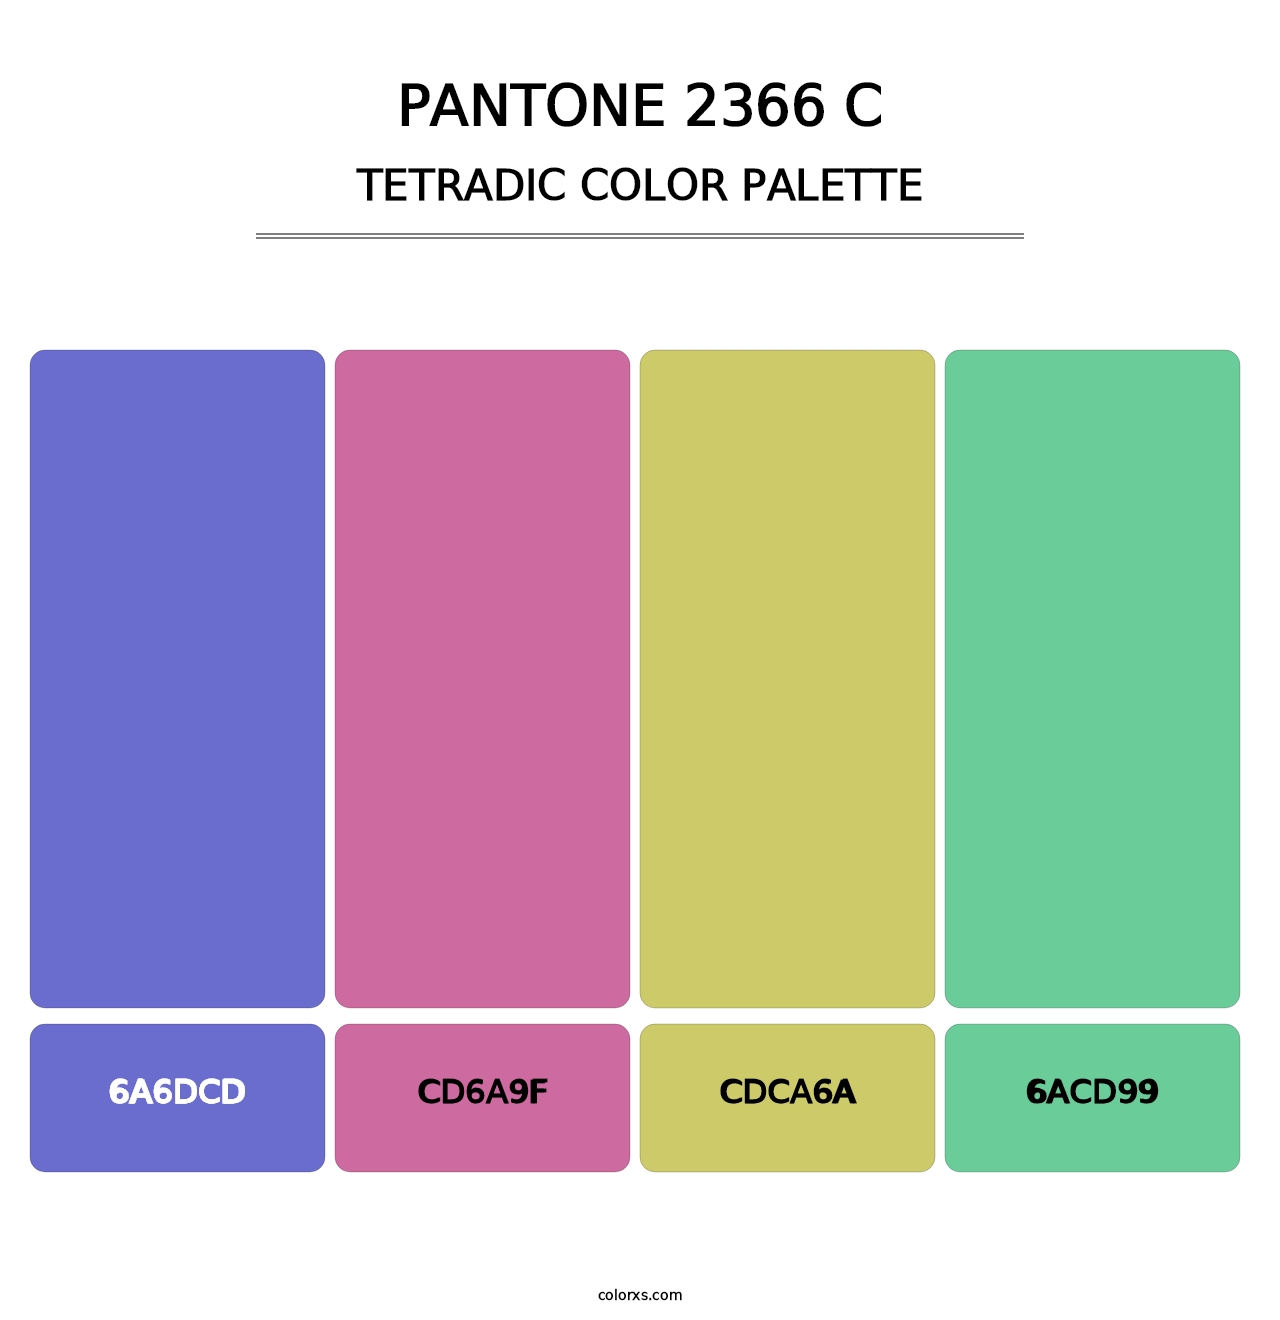 PANTONE 2366 C - Tetradic Color Palette